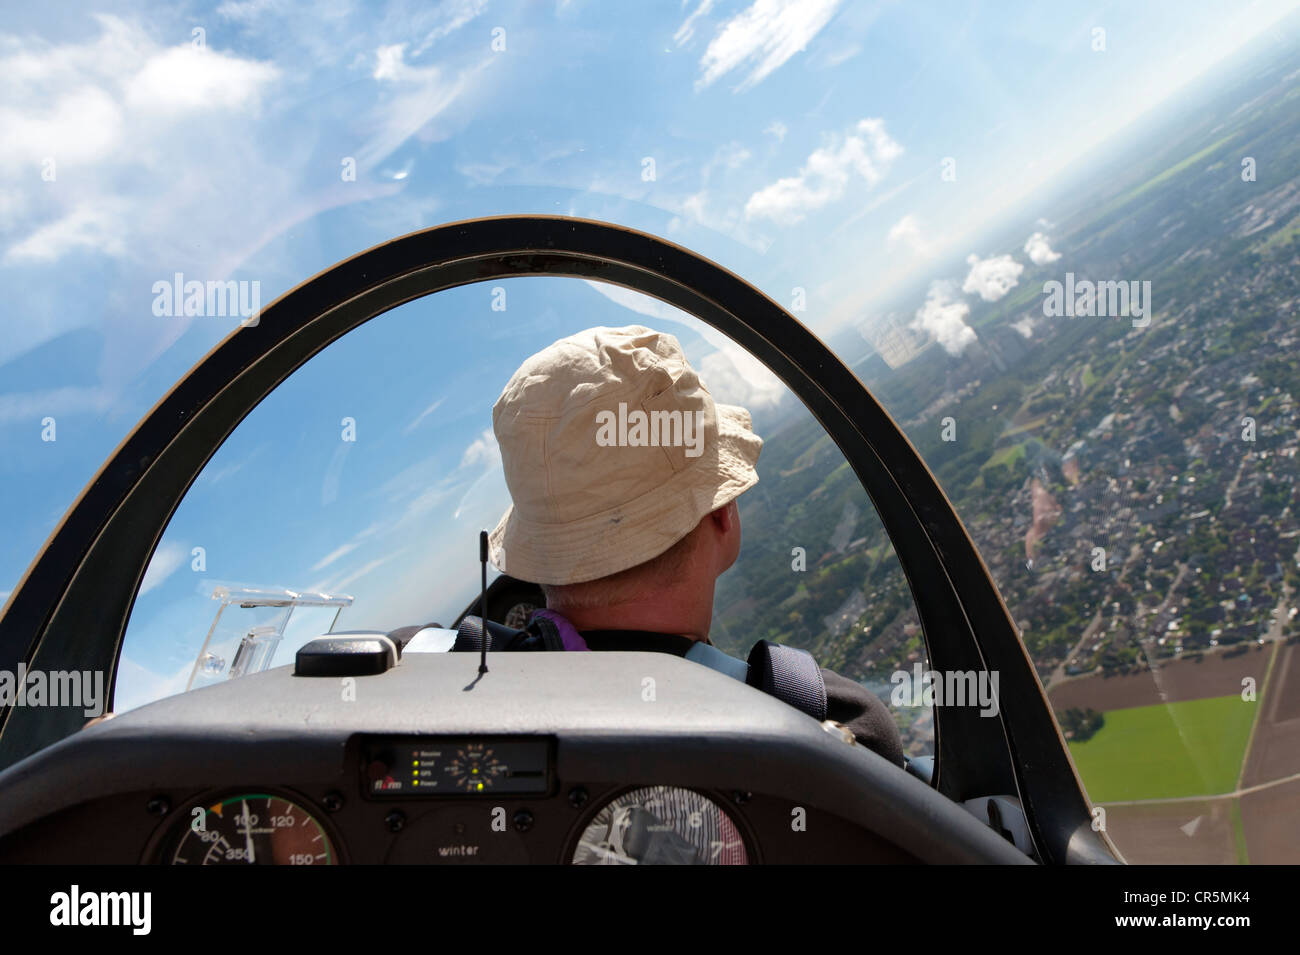 Pilot in a glider making a turn, Grevenbroich, North Rhine-Westphalia, Germany, Europe Stock Photo